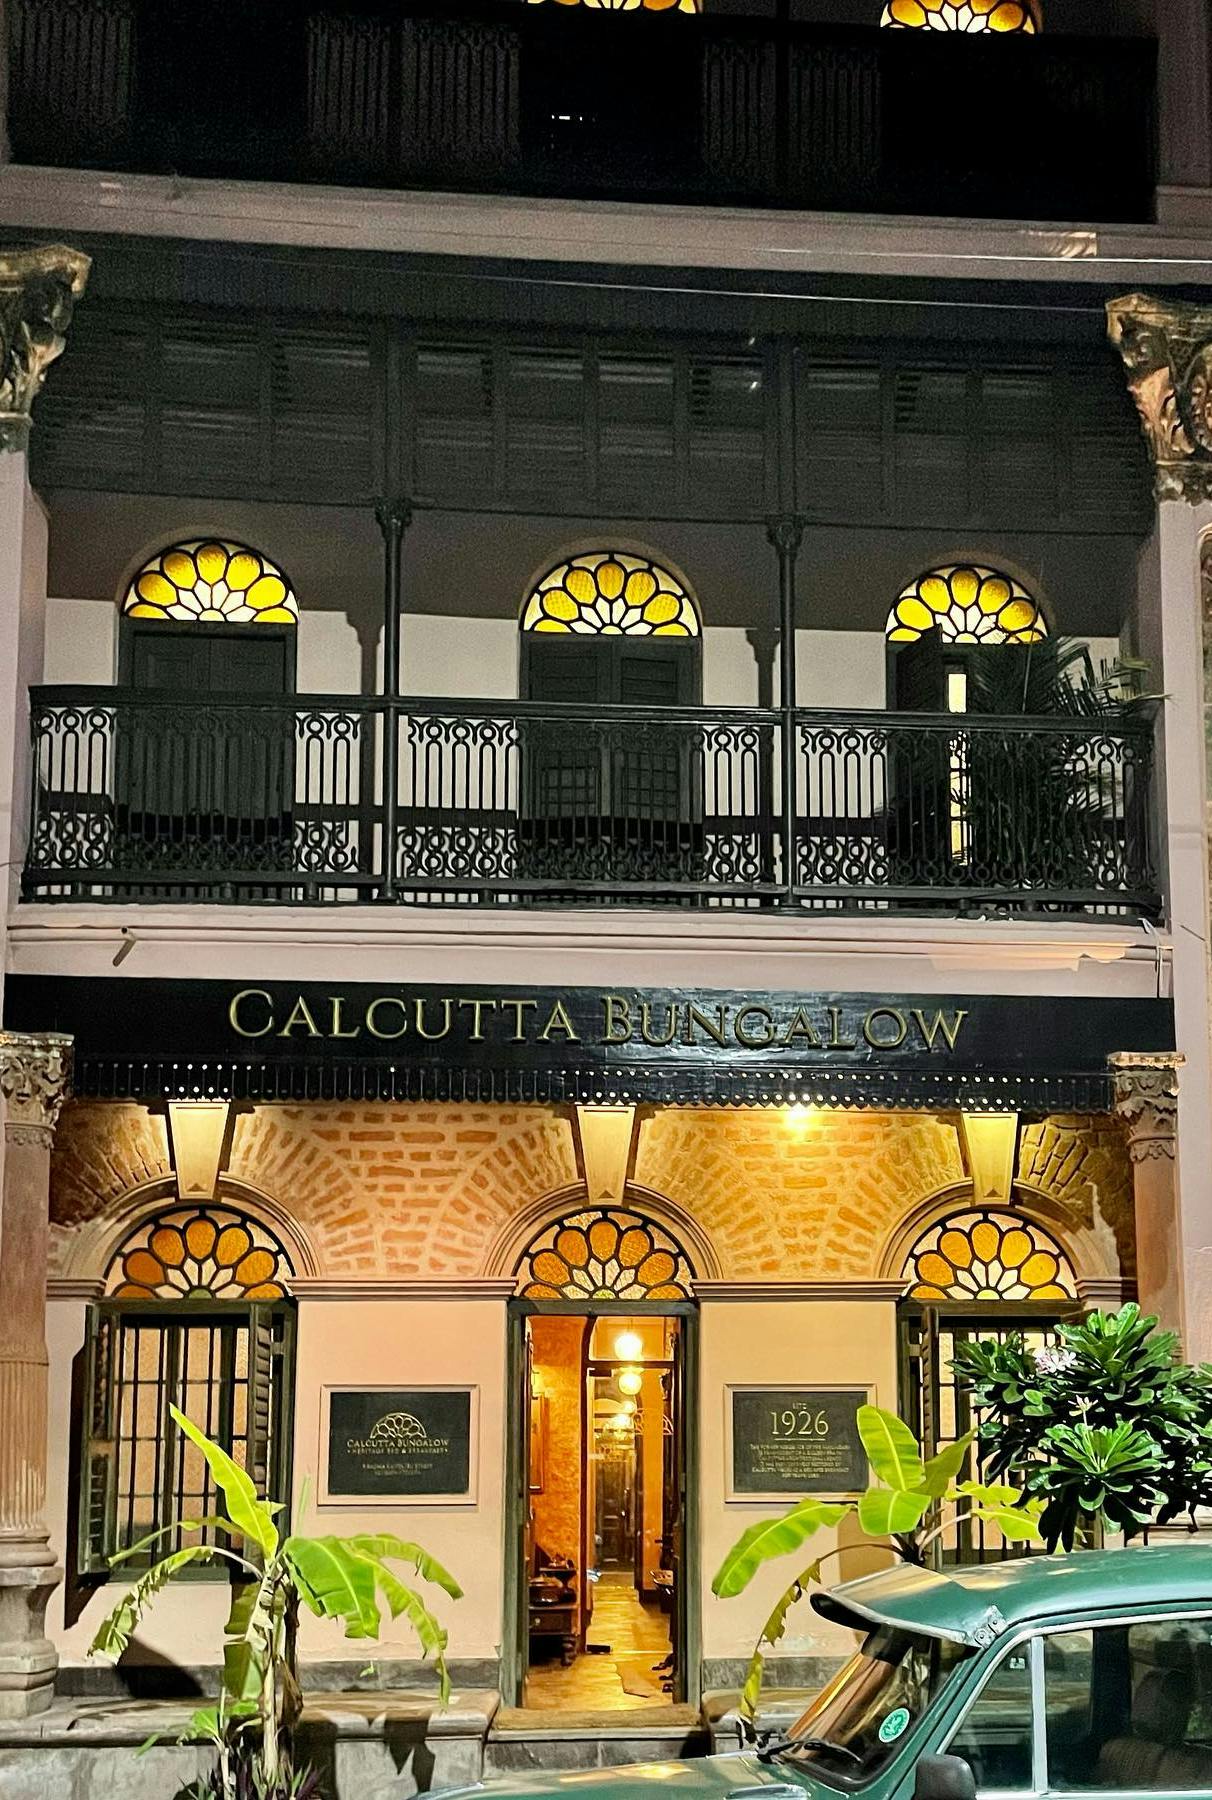 Calcutta Bungalow: The Lavish Heritage